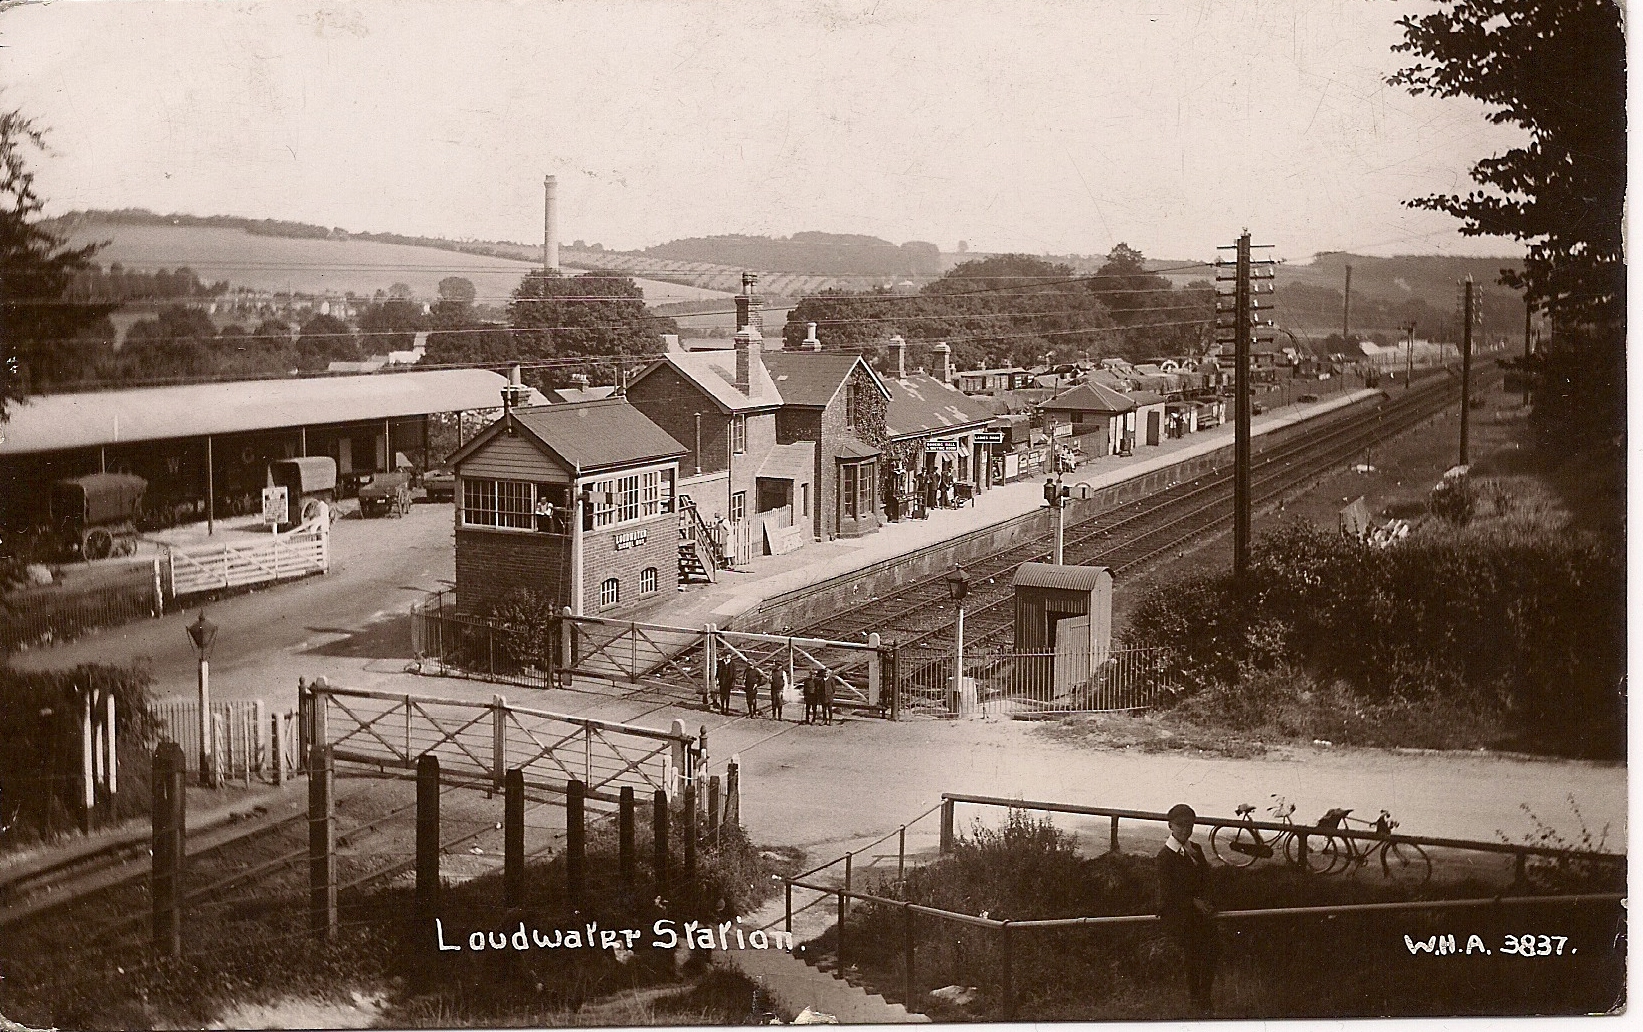 Loudwater railway station